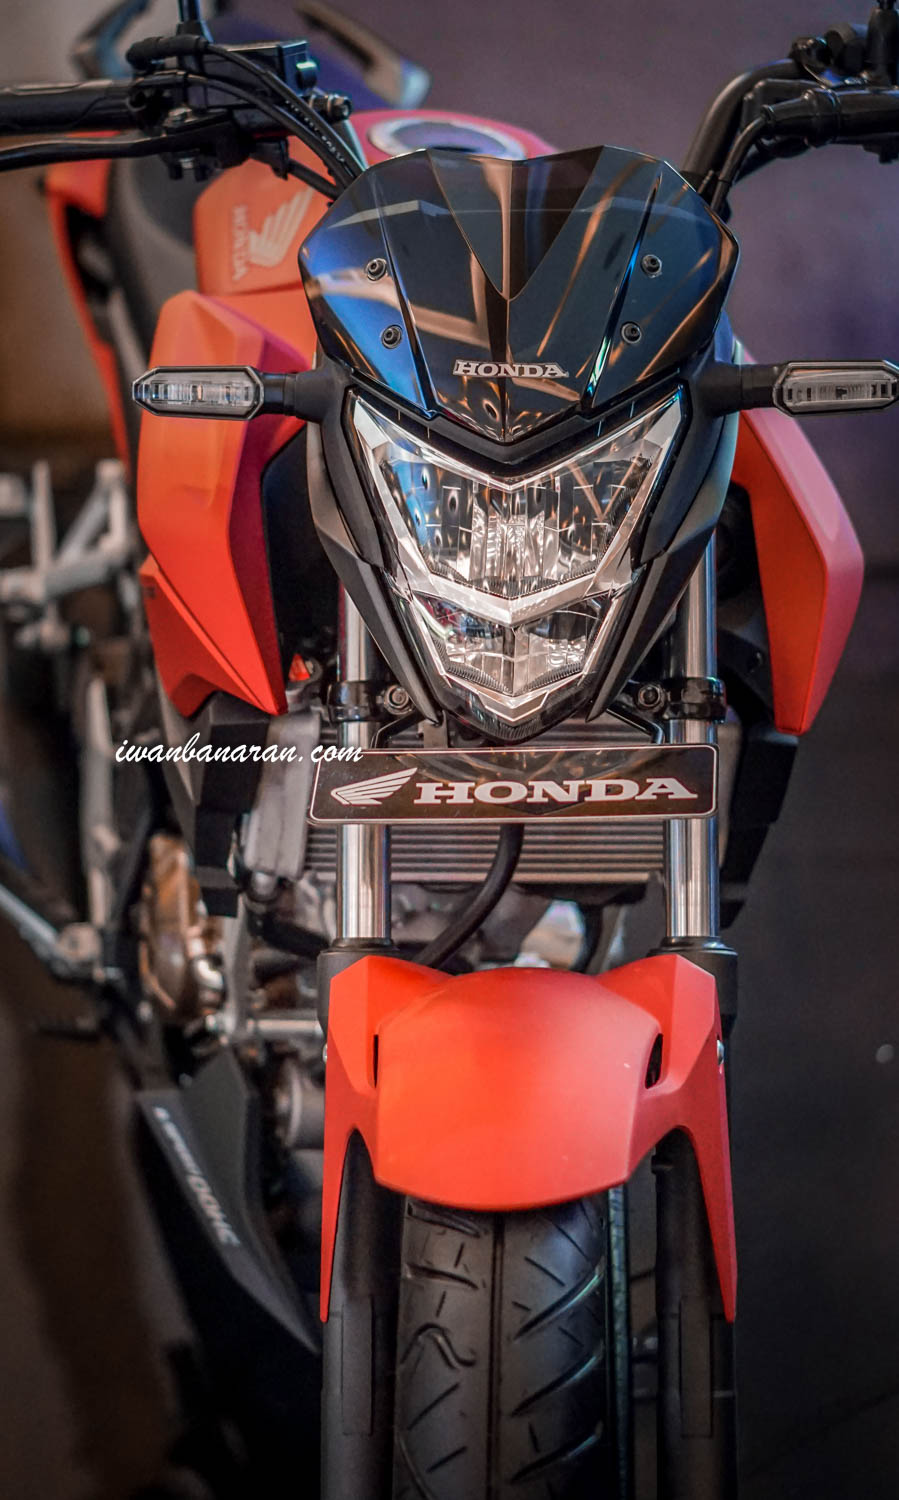 Honda CB150R 2019 Cai tien kieu dang canh tranh gat gao voi Fz155i cua Yamaha - 2